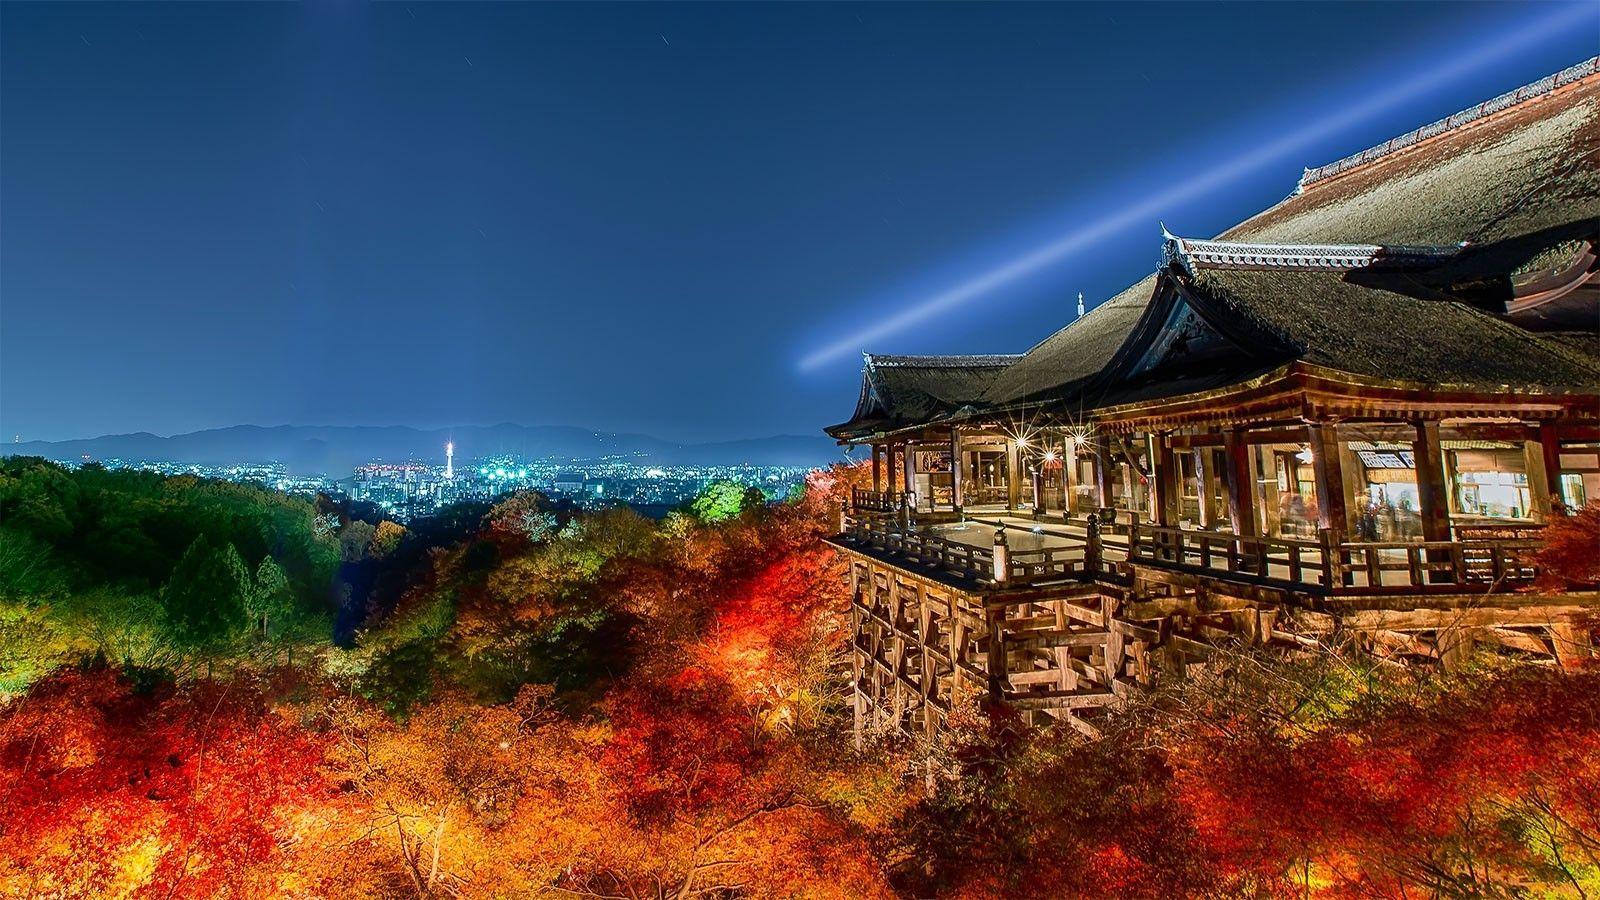 Fusihimi Inari Kyoto Japan iPhone Wallpapers Free Download